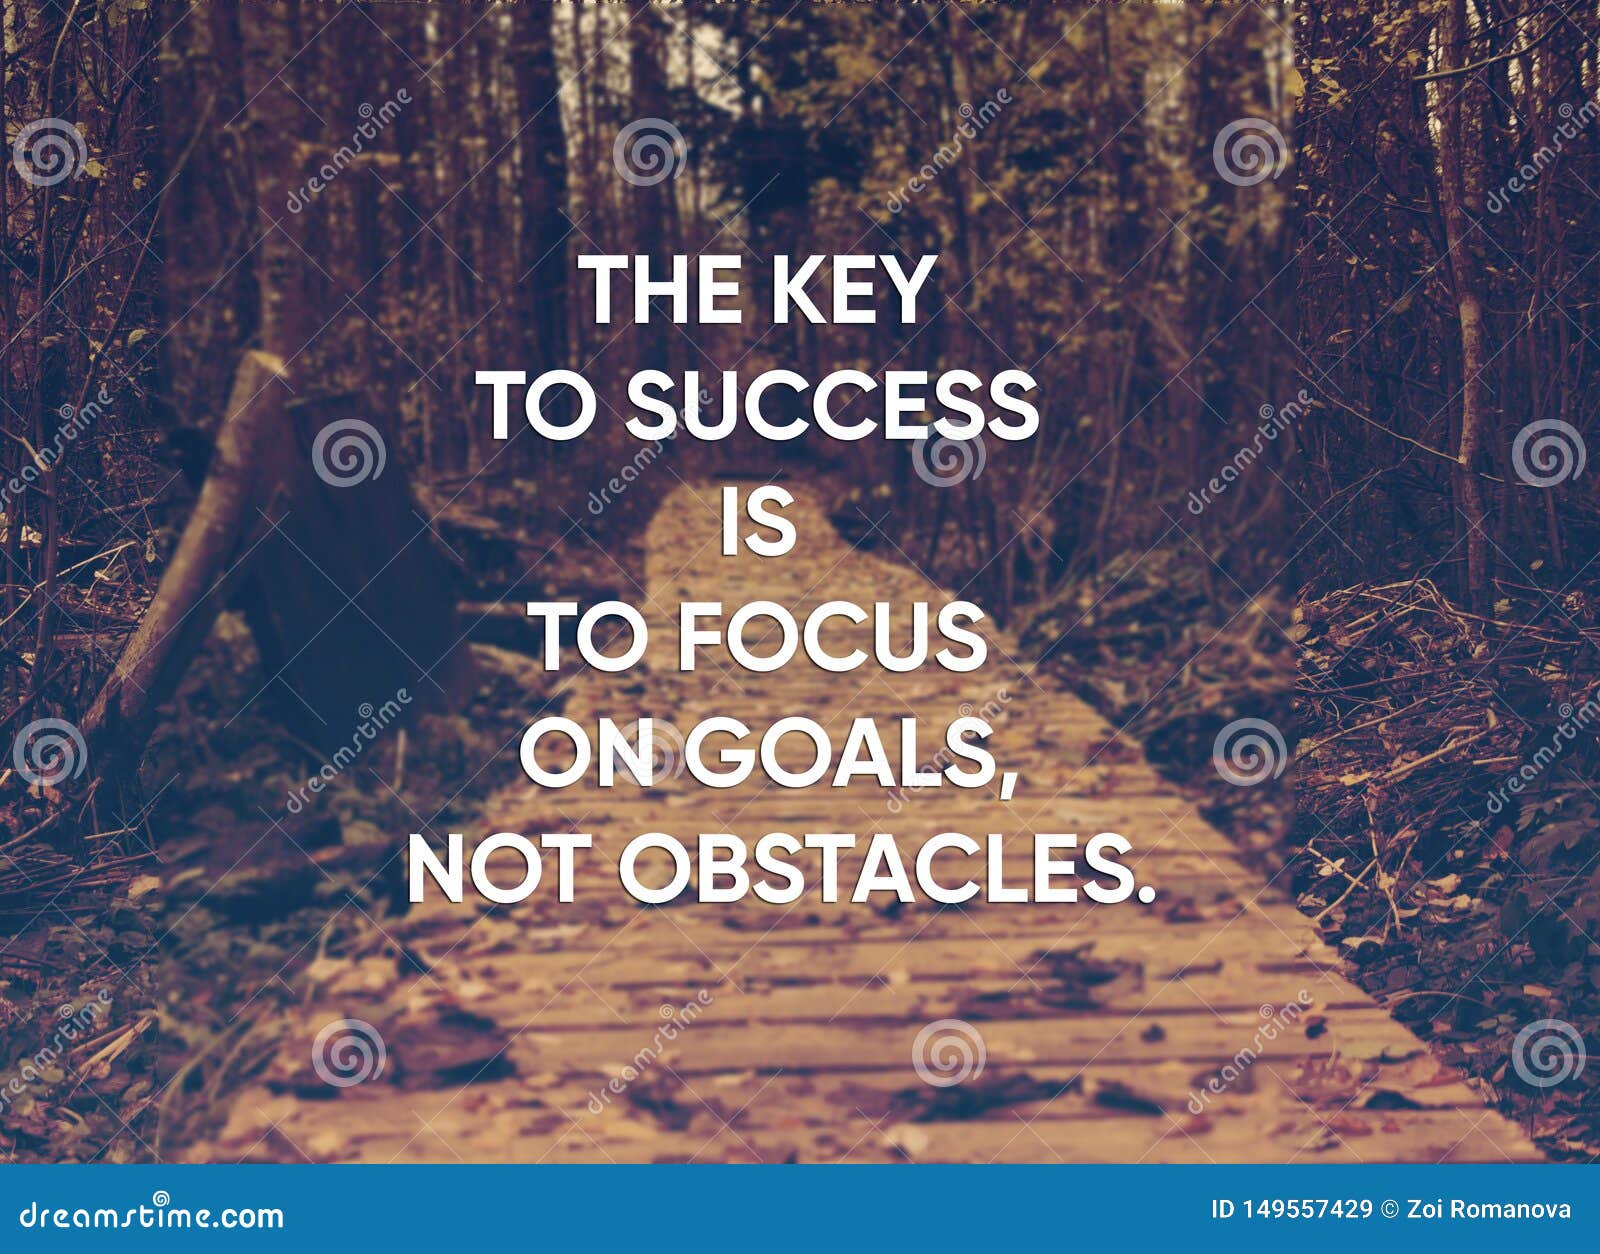 Inspiring Quotes On Success